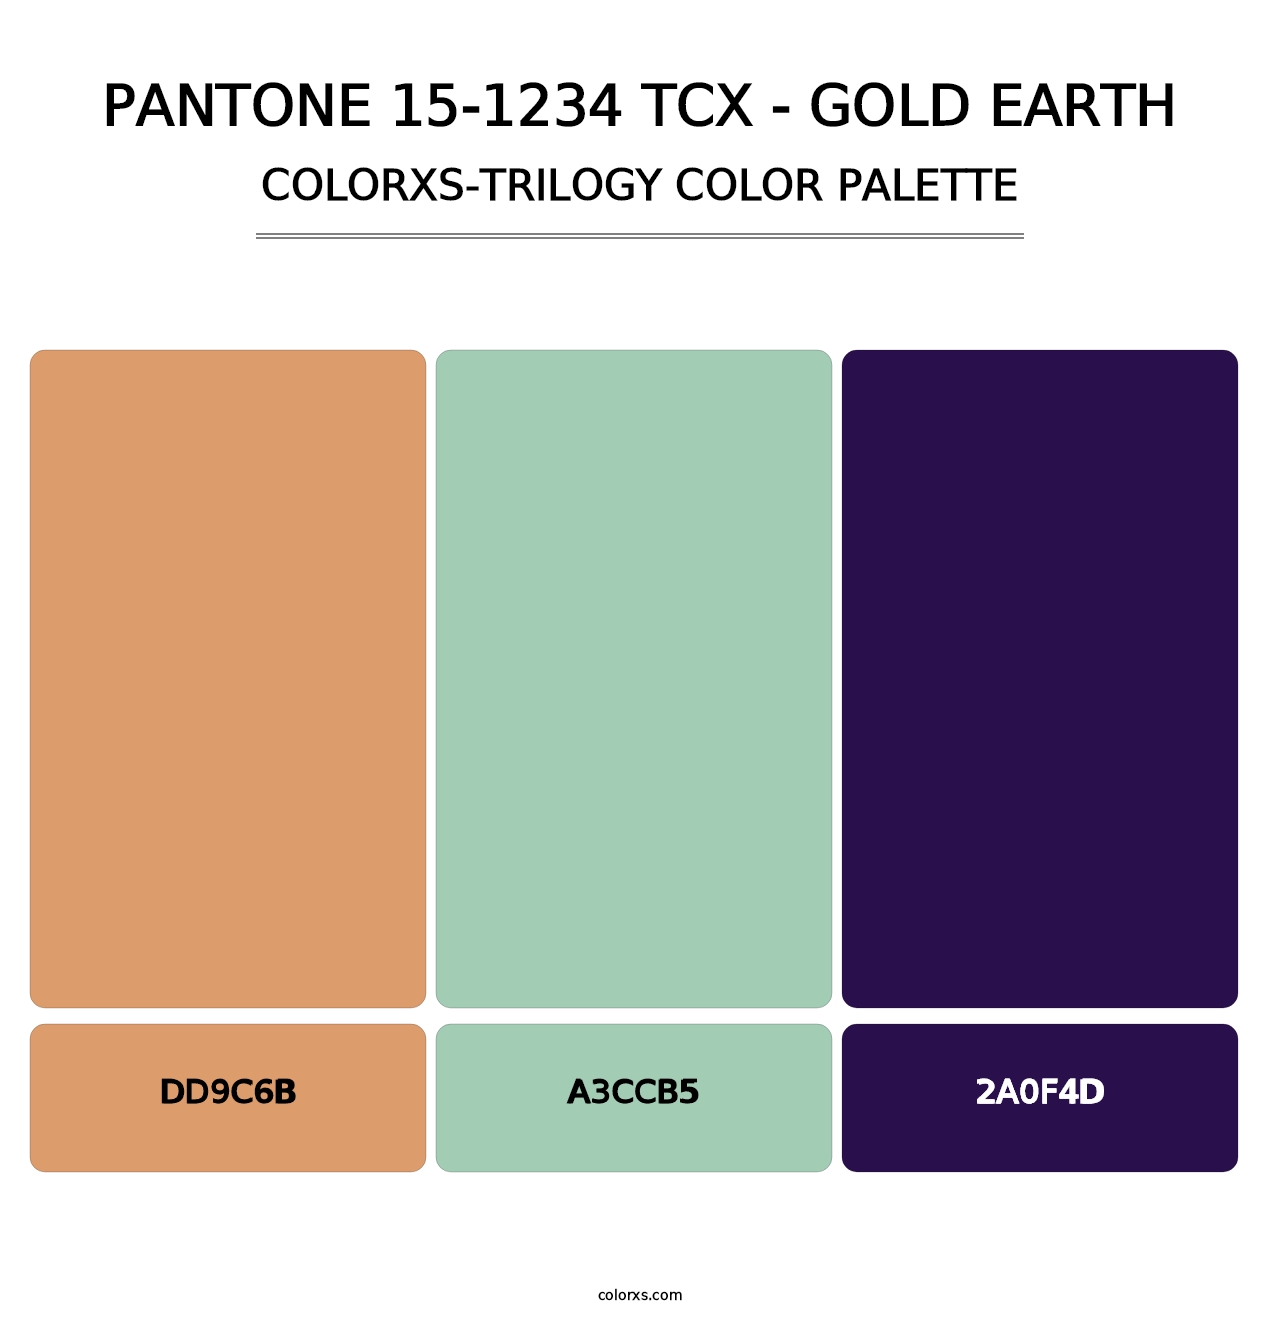 PANTONE 15-1234 TCX - Gold Earth - Colorxs Trilogy Palette